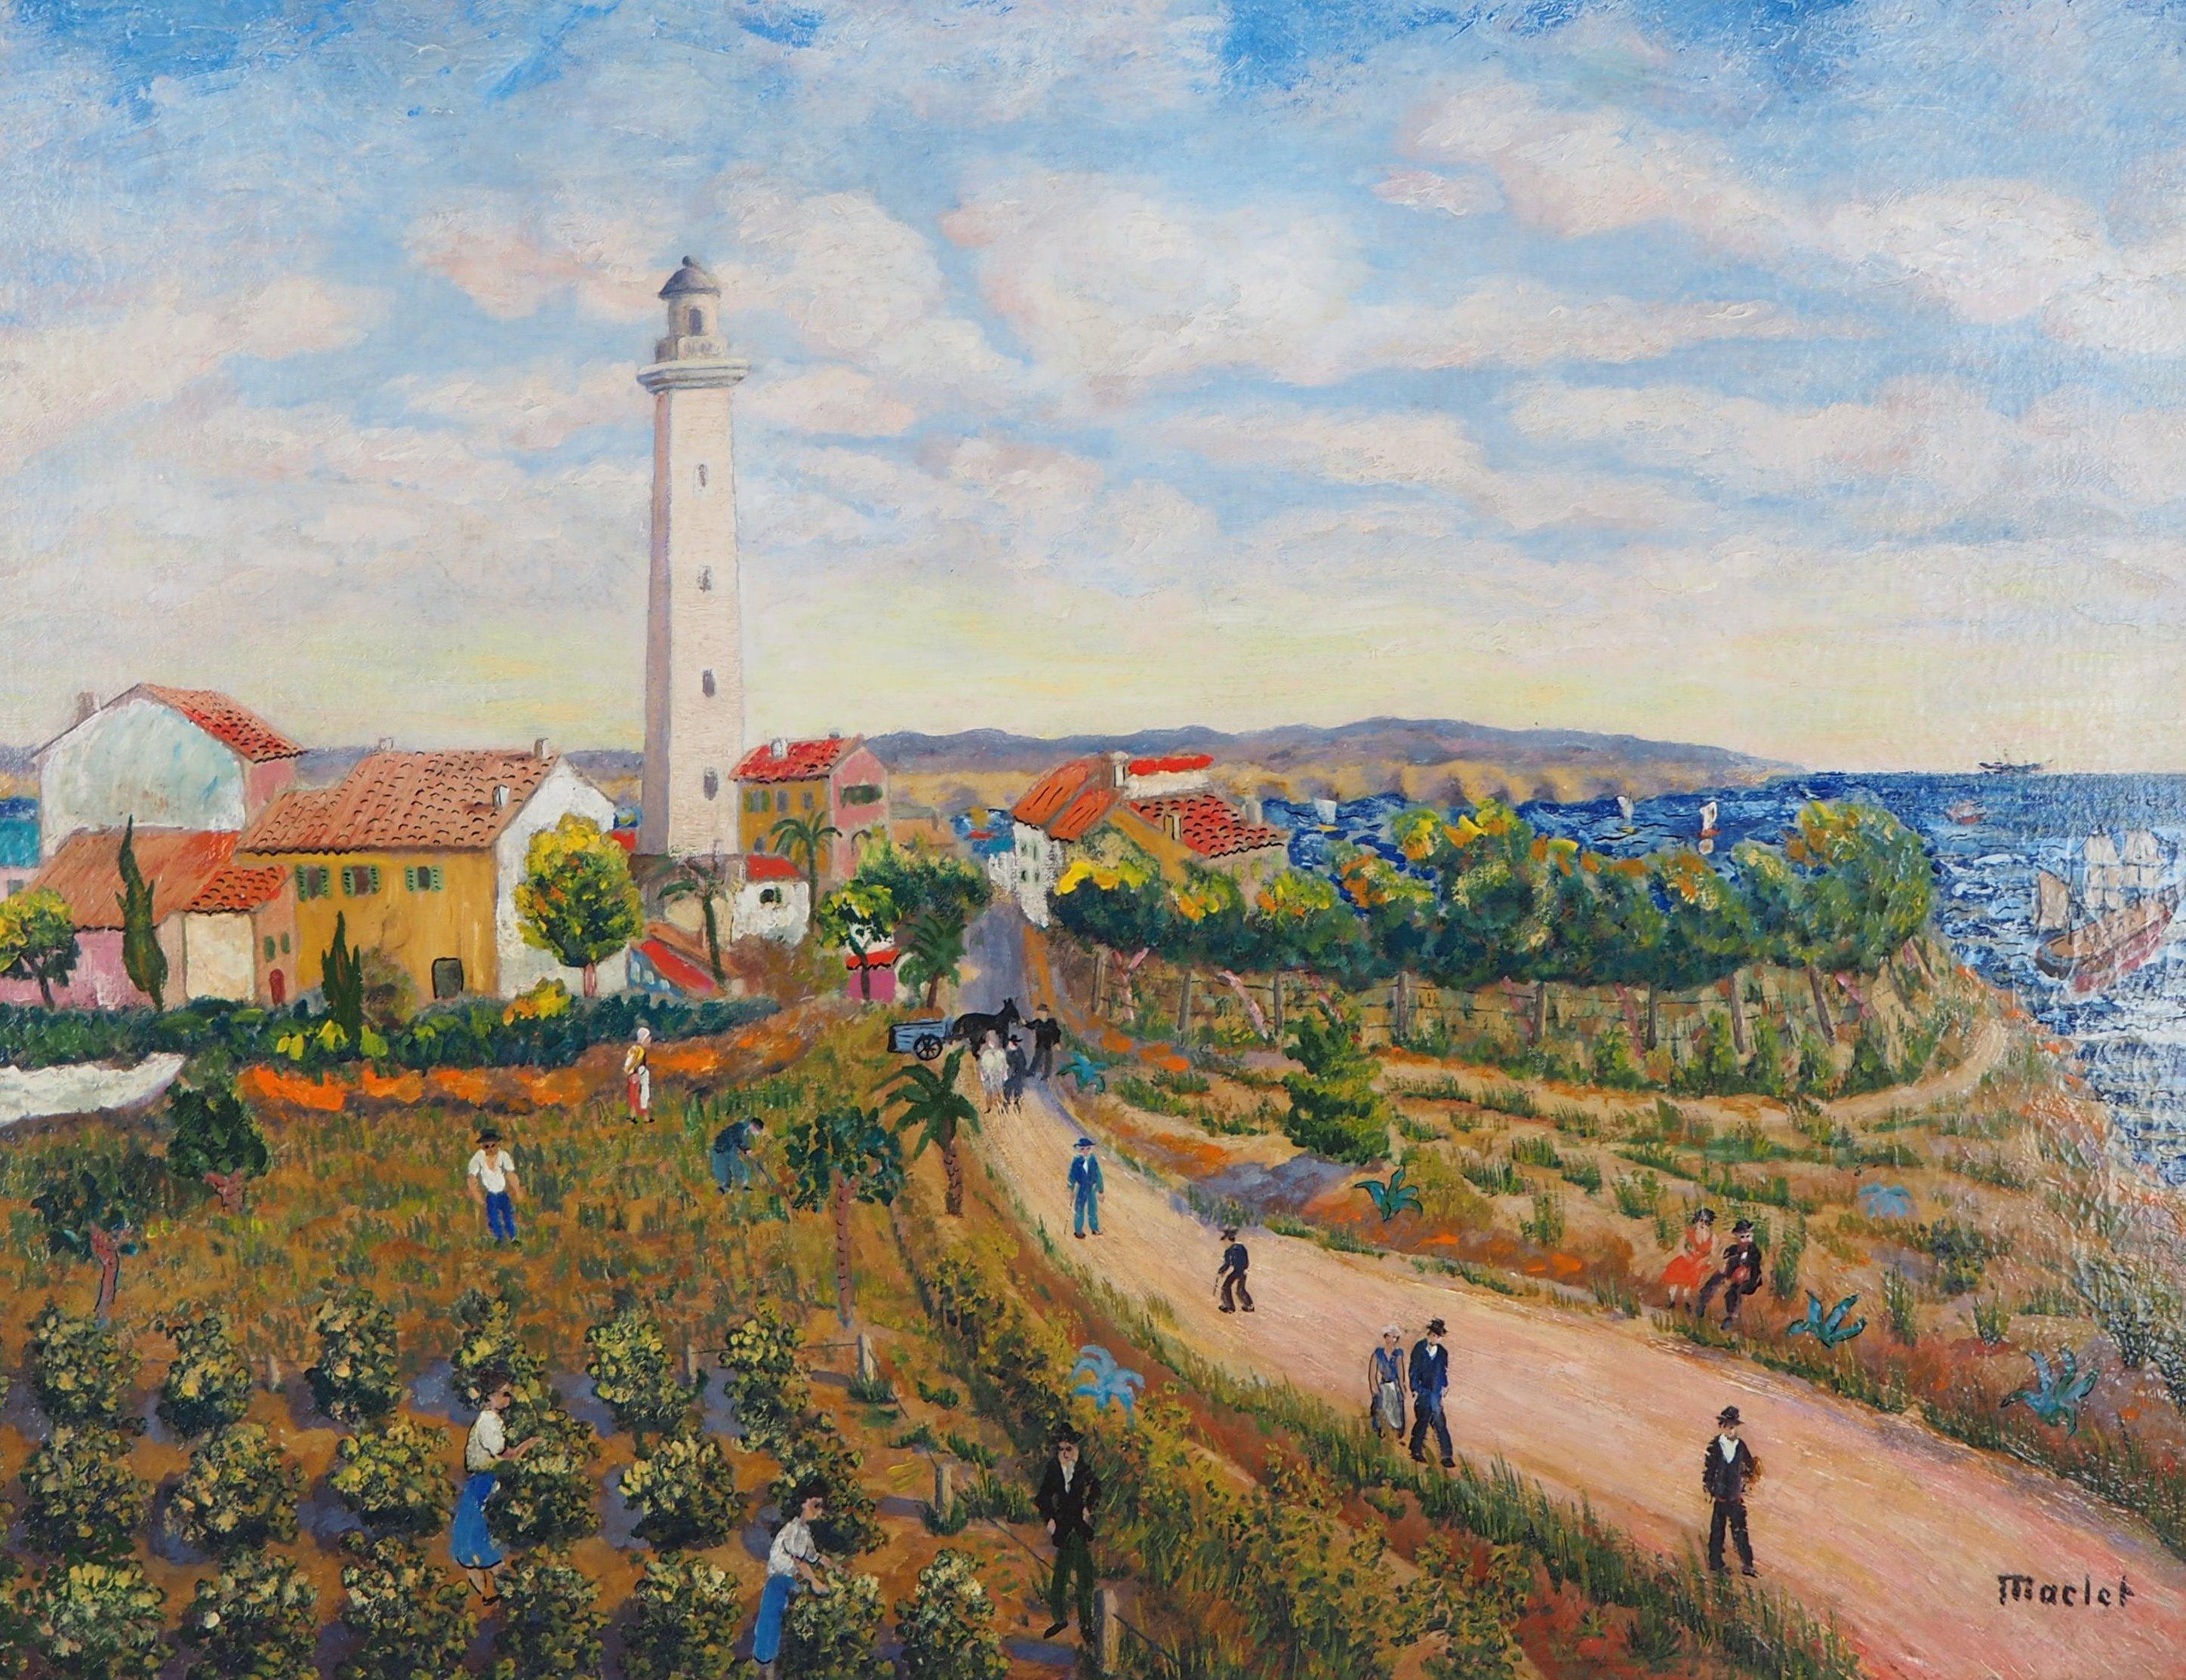 Landscape with a Lighthouse - Original Oil on Canvas, Handsigned, c. 1930 - Gray Landscape Painting by Elisée Maclet